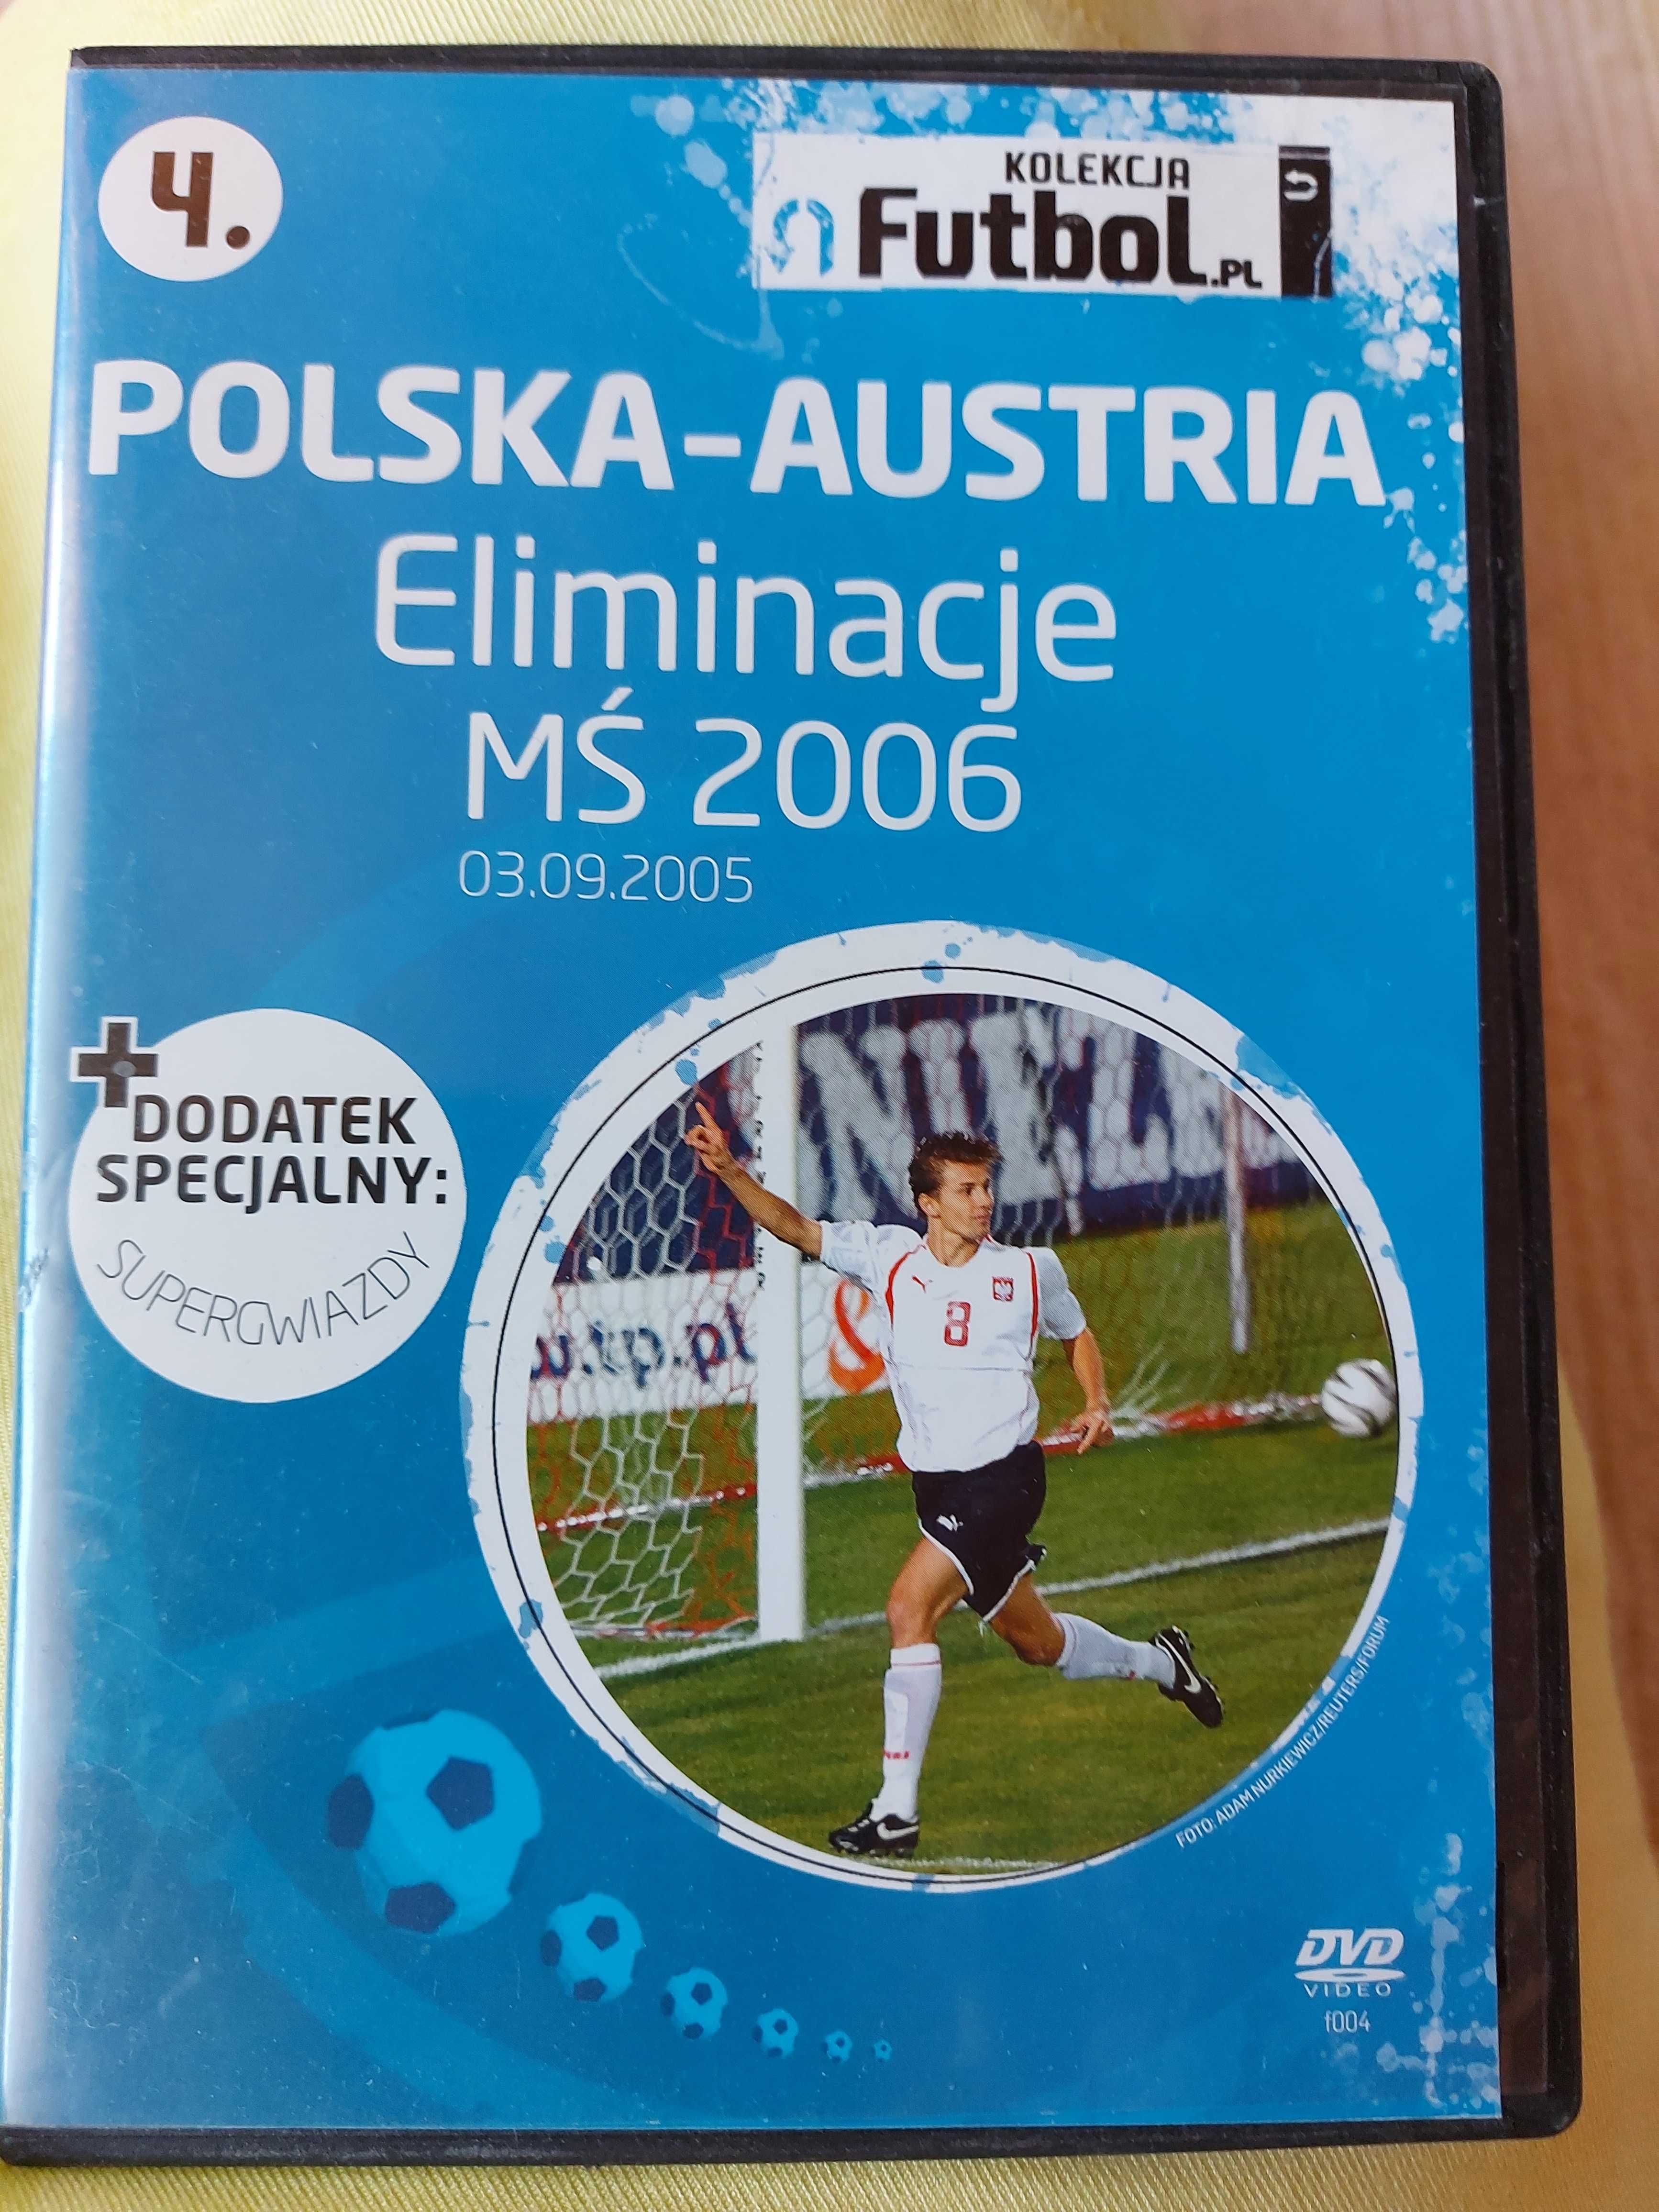 Kolekcja Futbol.pl Polska-Austria 2006 dvd